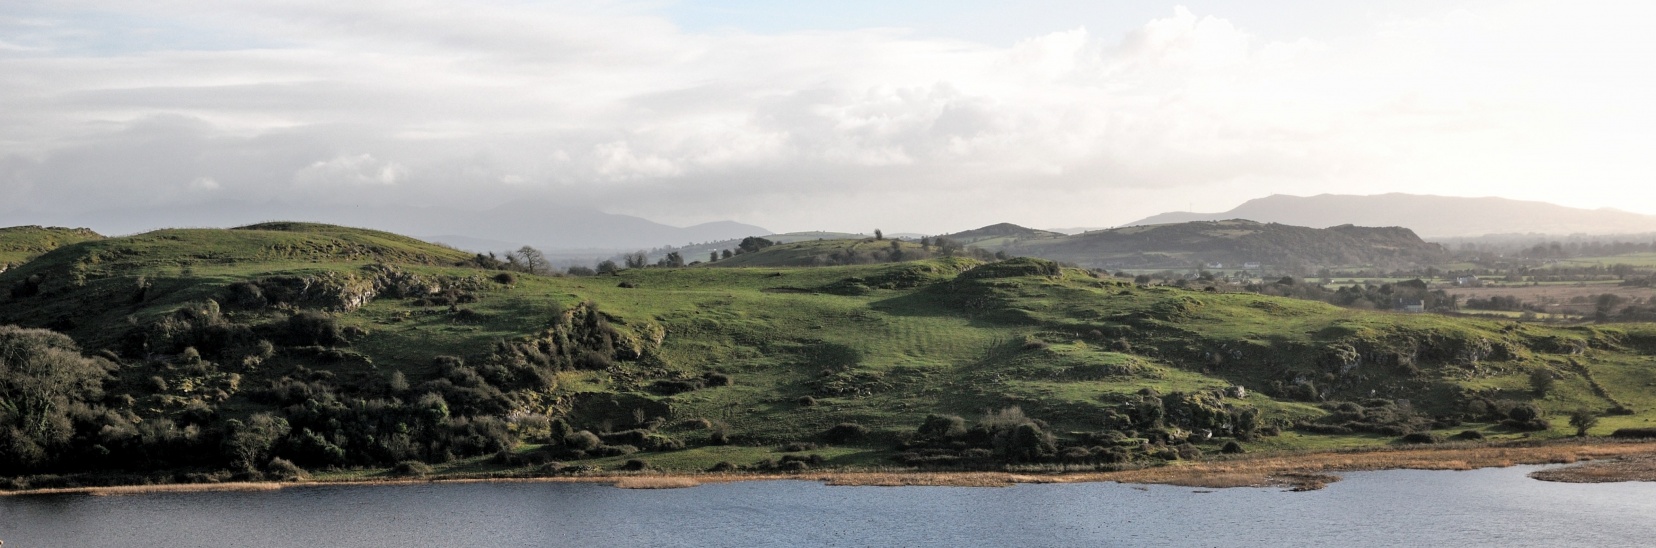 Die Hügel am Loch Gur